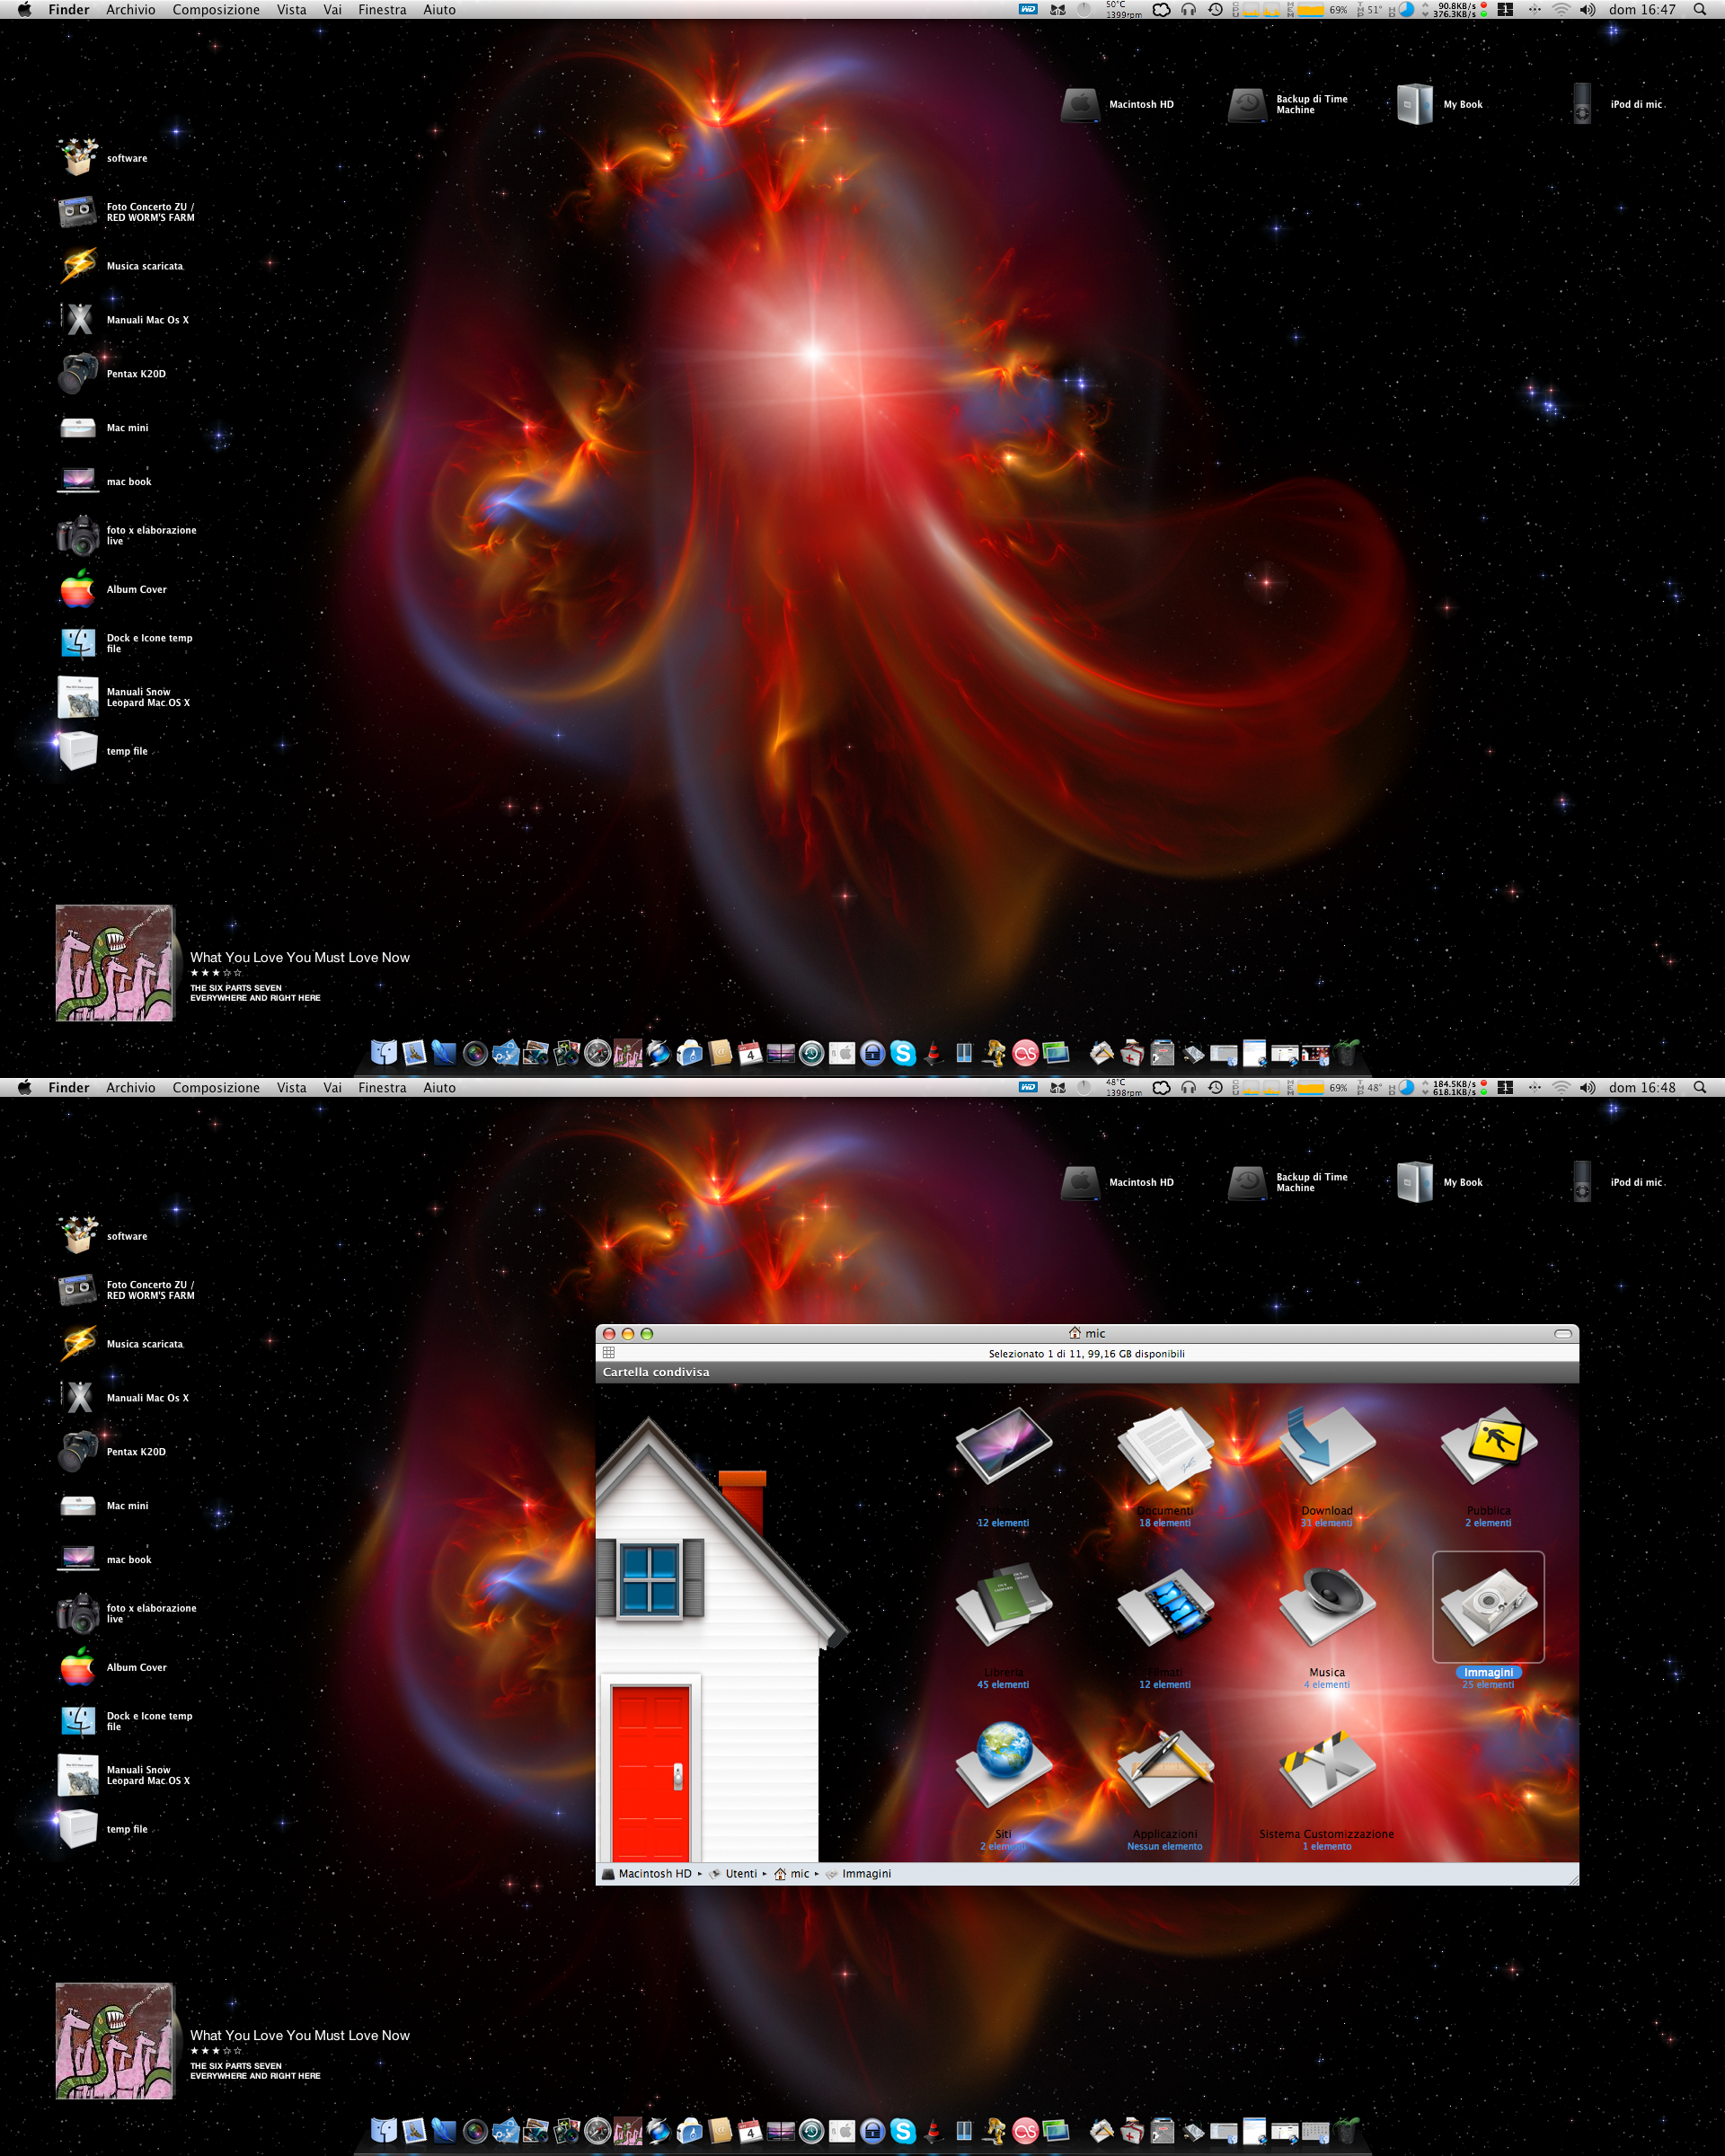 iMac Screenshot 04.10.2009b